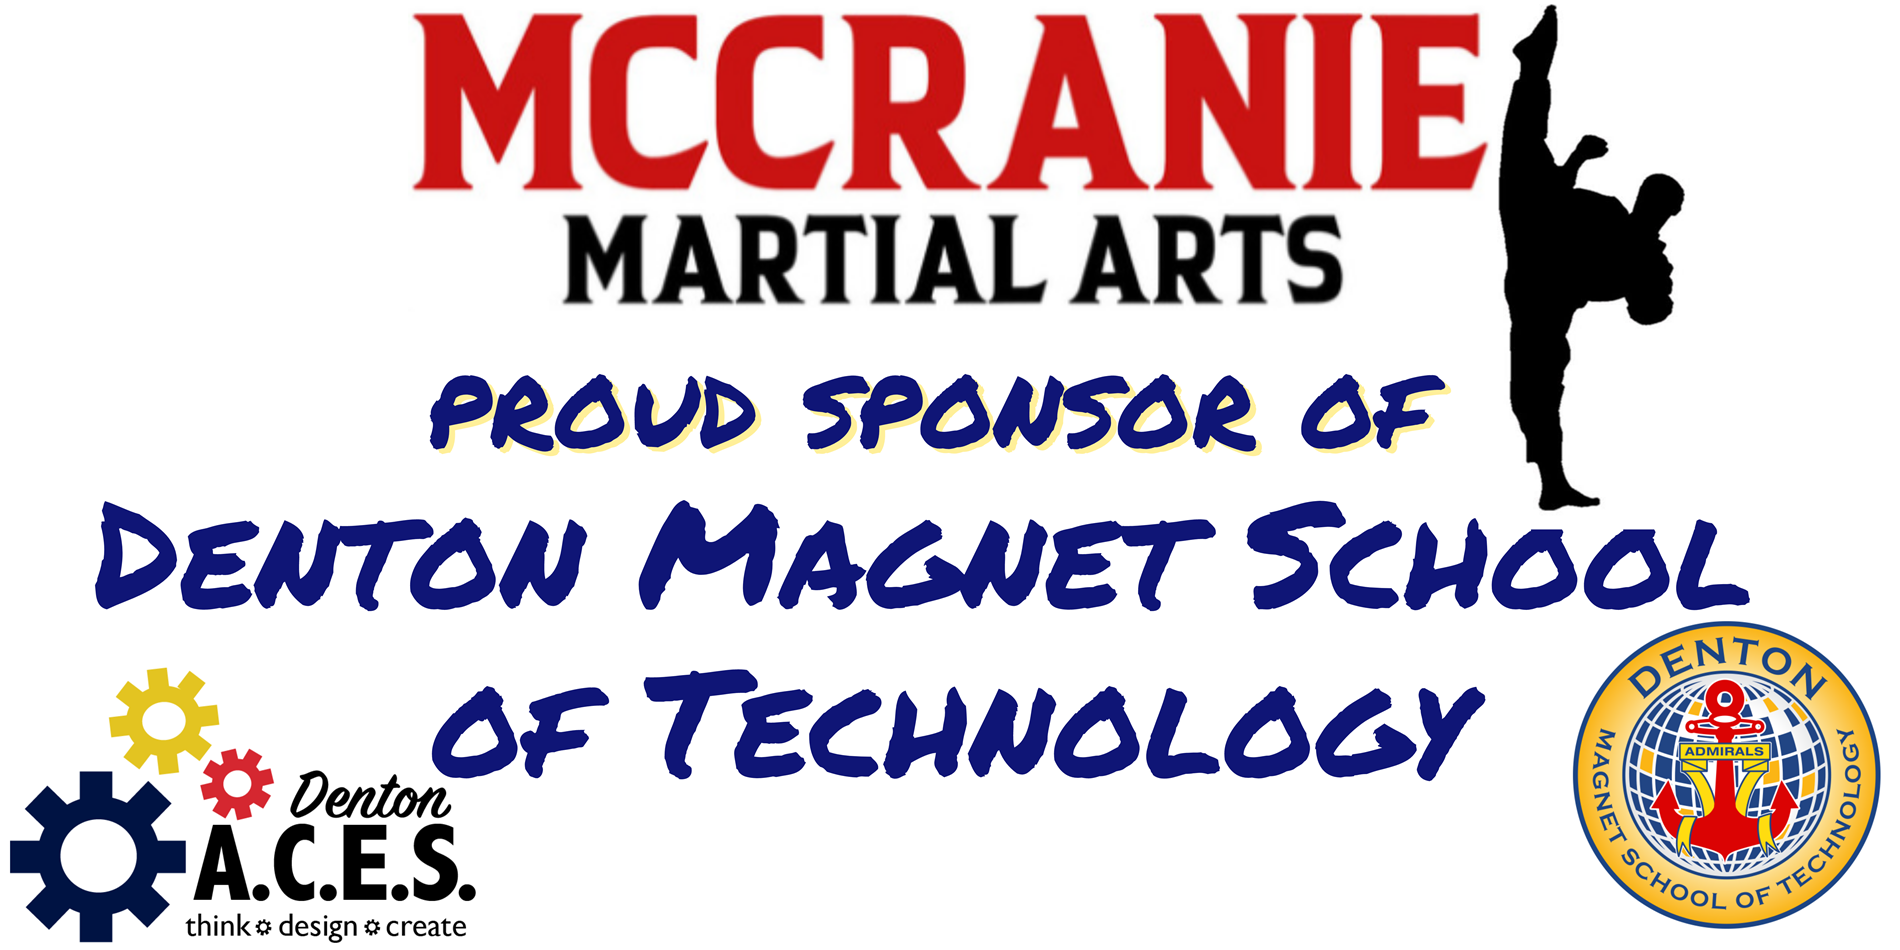 McCranie Martial Arts